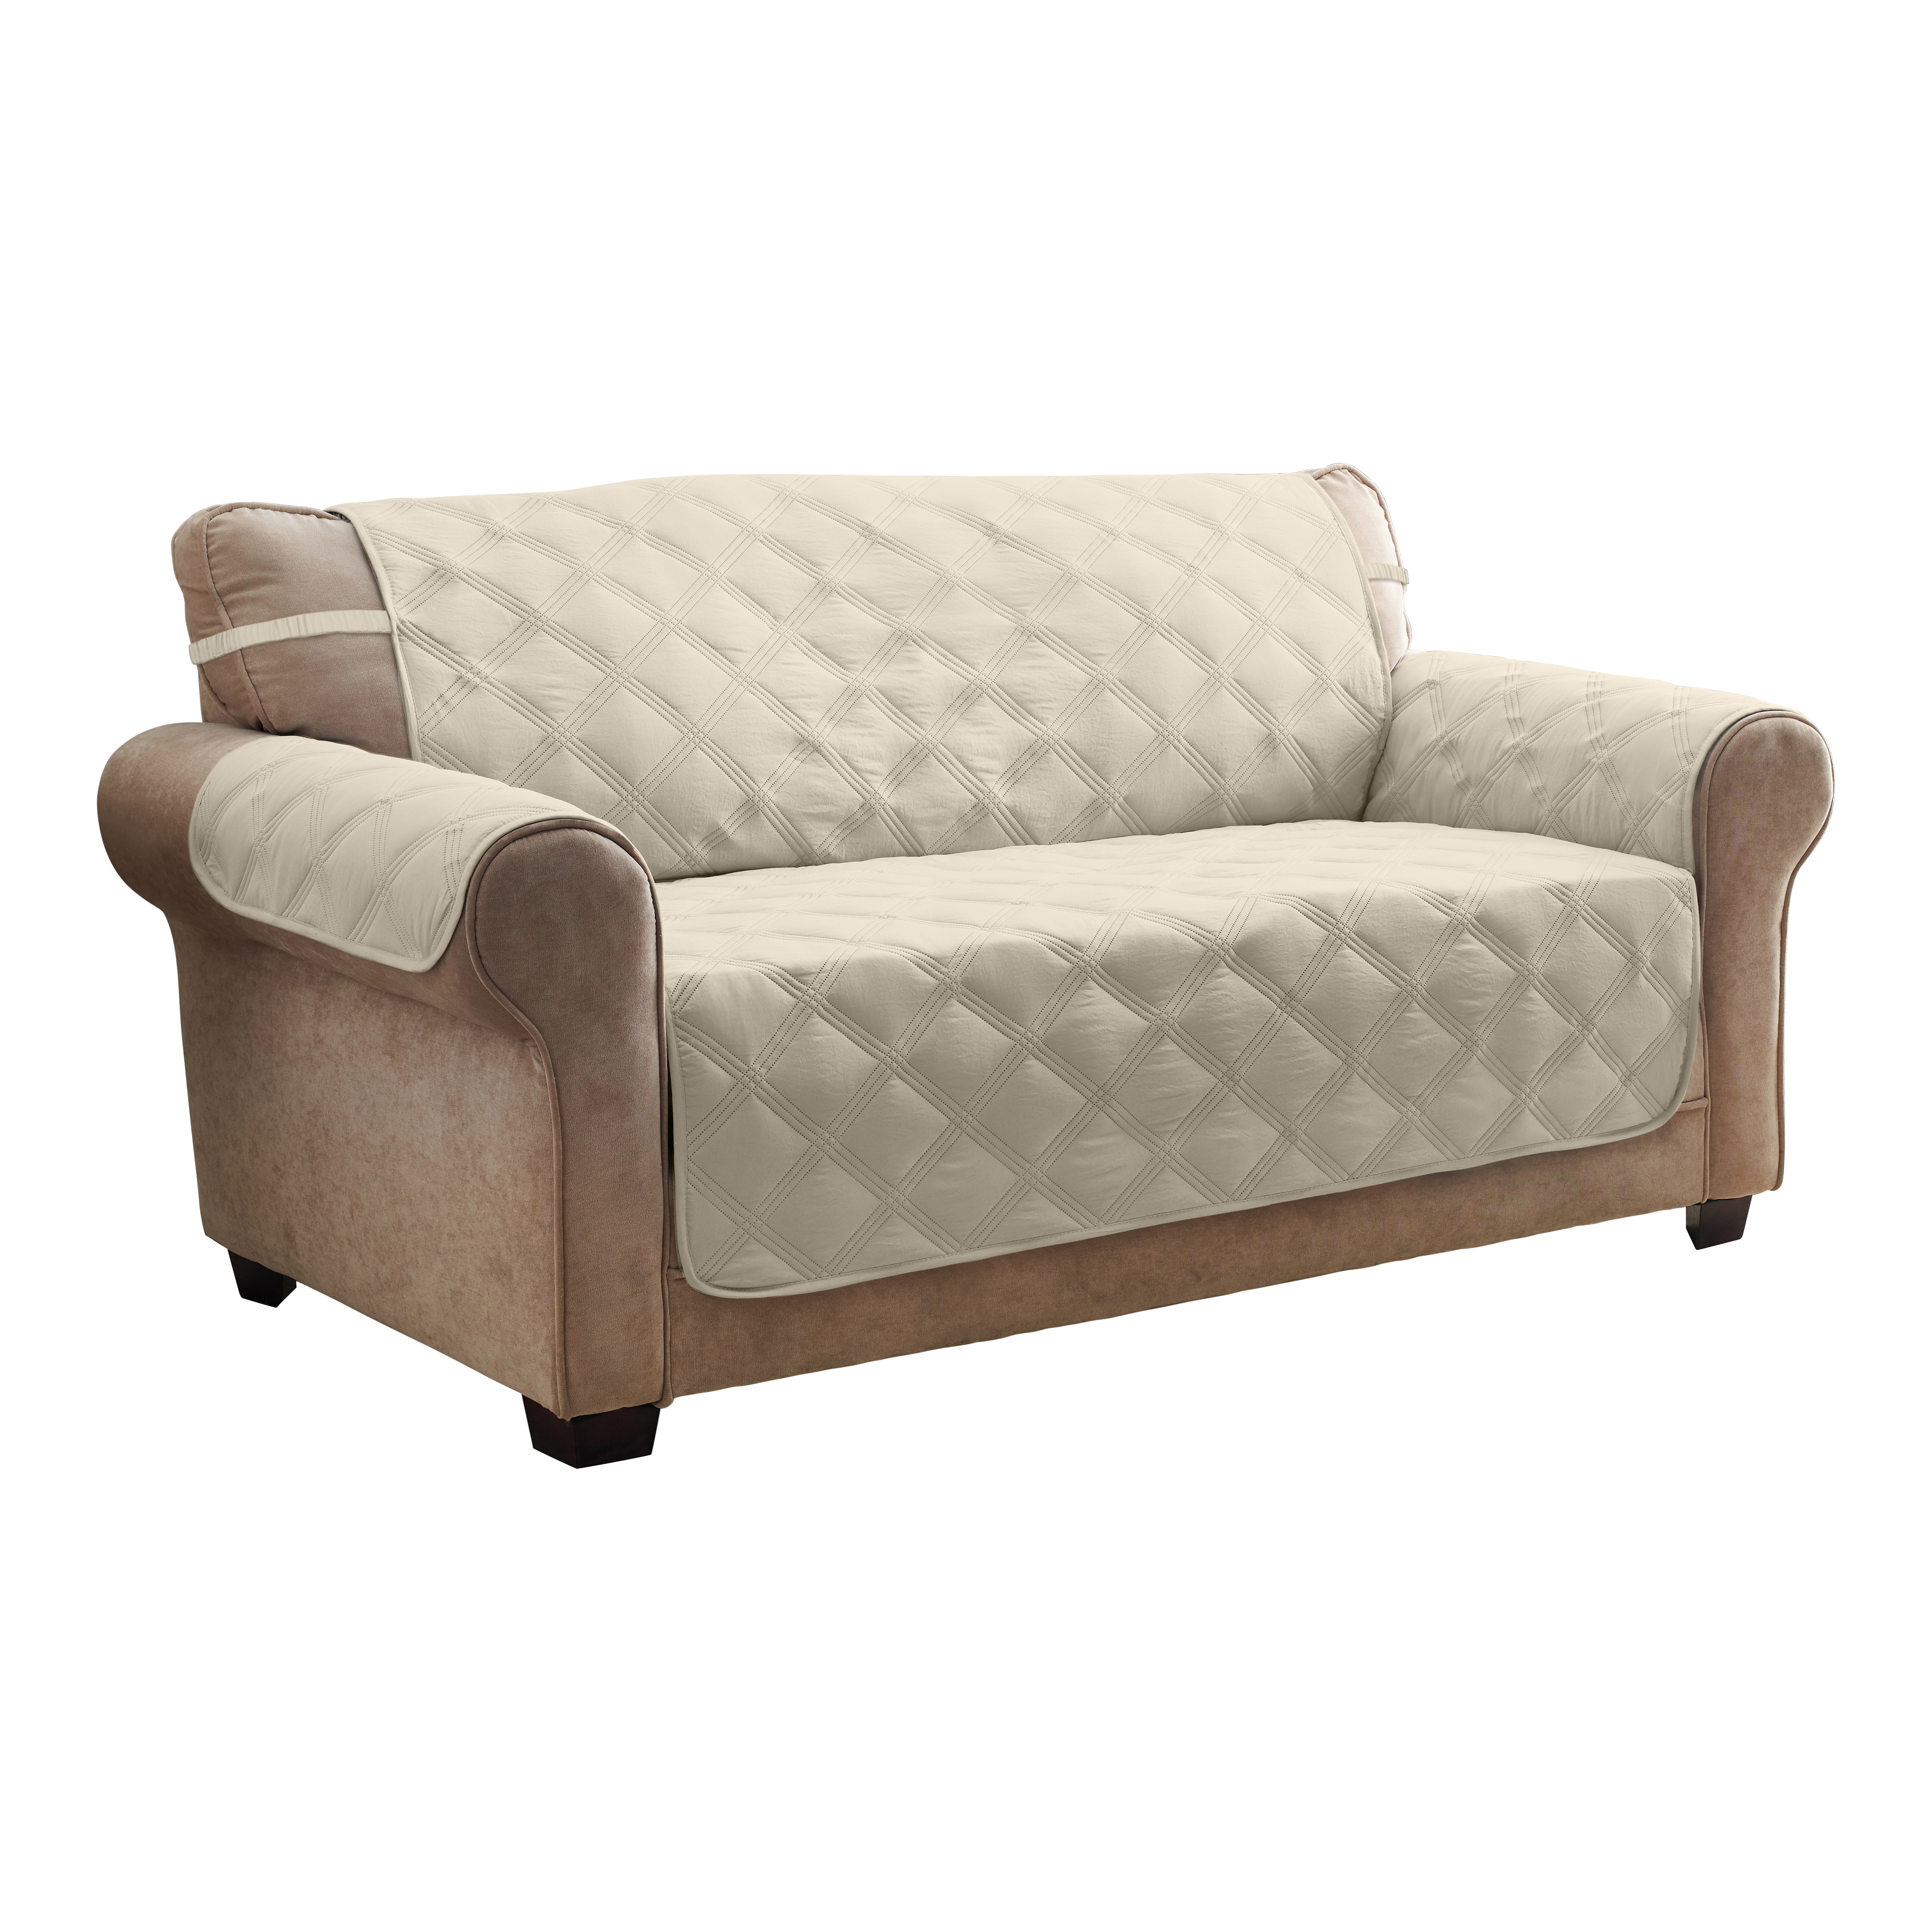 Innovative Textile Solutions 1-piece Hampton Diamond Secure Fit Sofa Furniture Cover, Sand - image 2 of 11